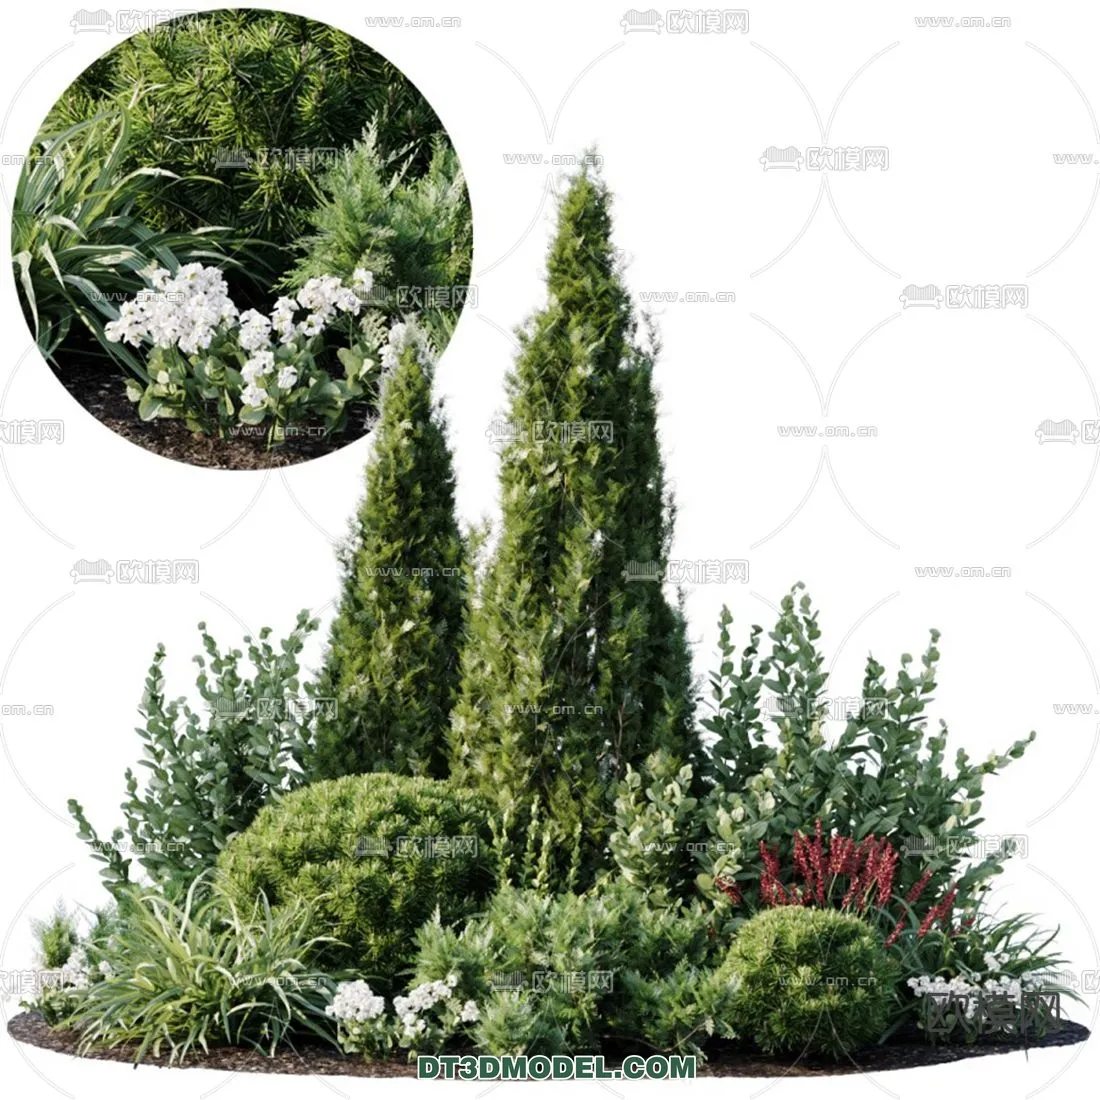 PLANTS – BUSH – VRAY / CORONA – 3D MODEL – 275